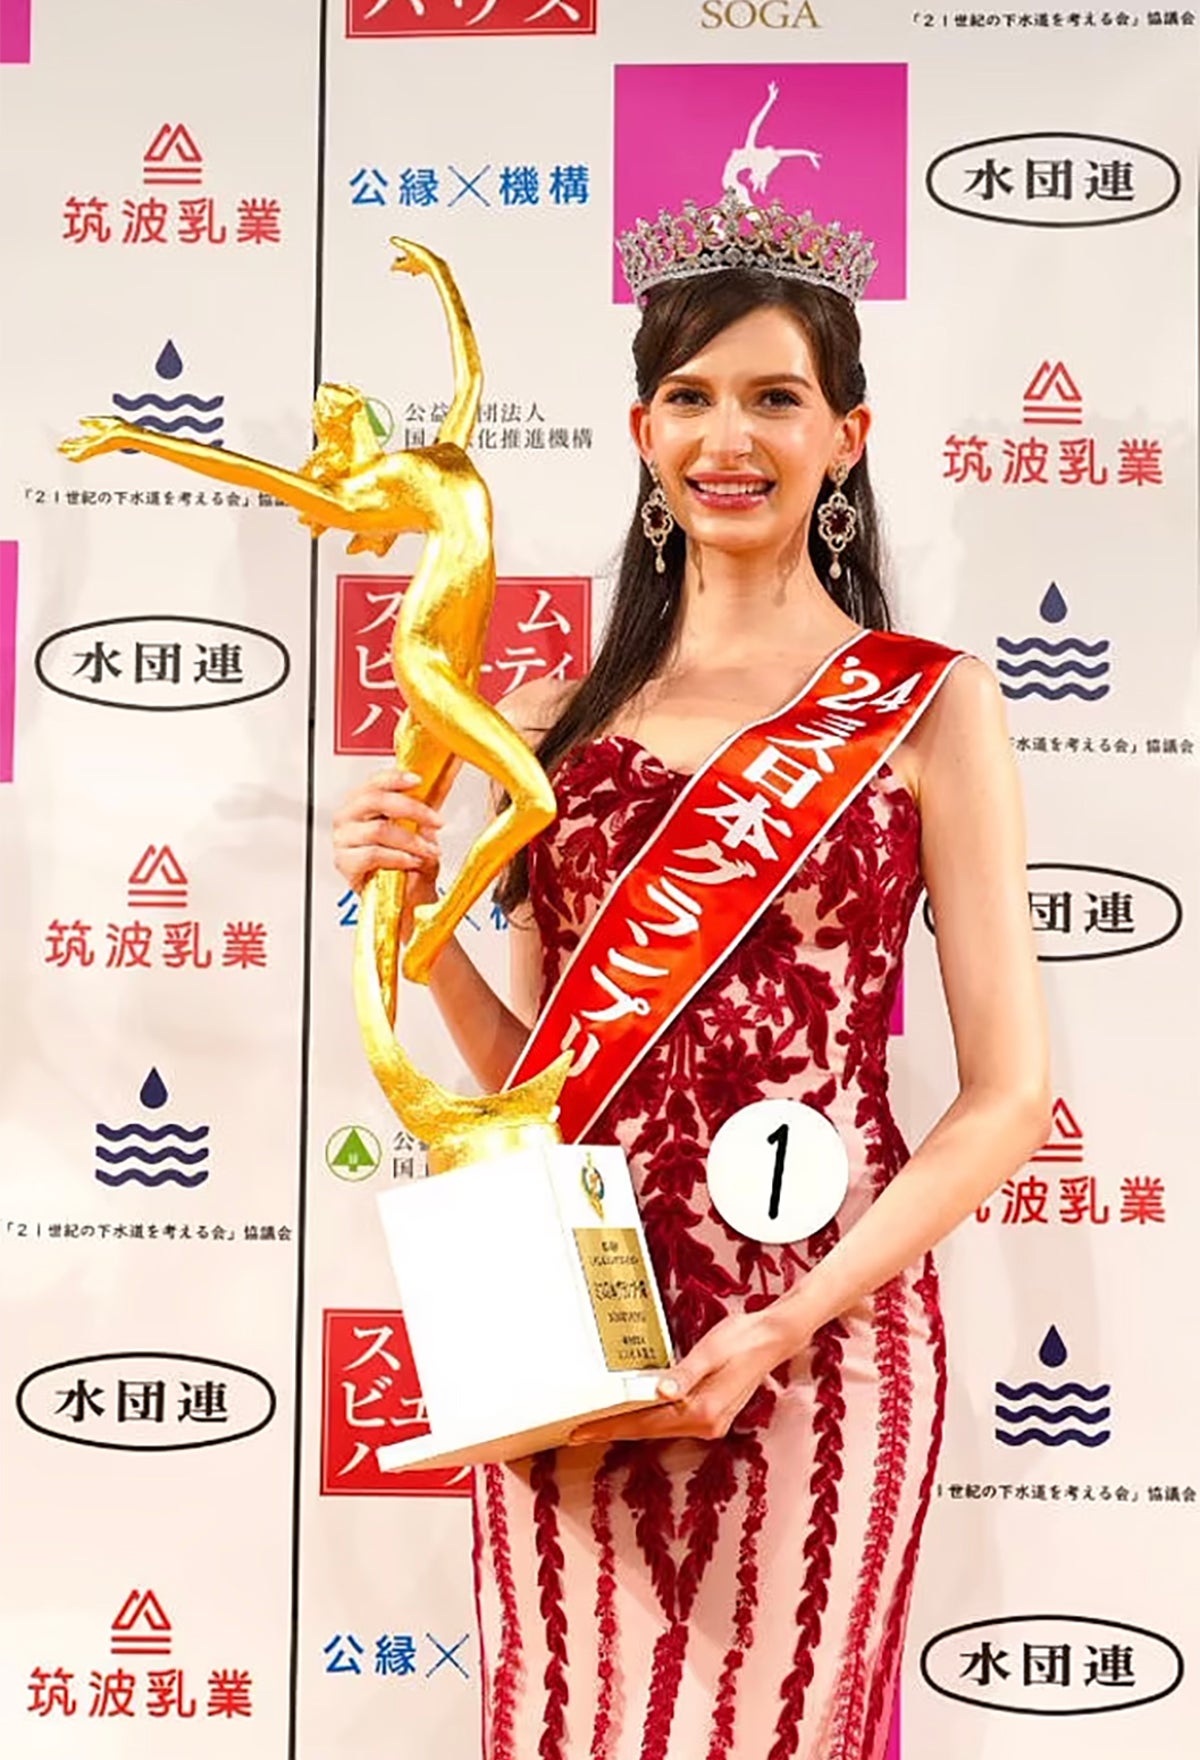 ukrainian-born japanese woman sparks debate after being crowned miss japan